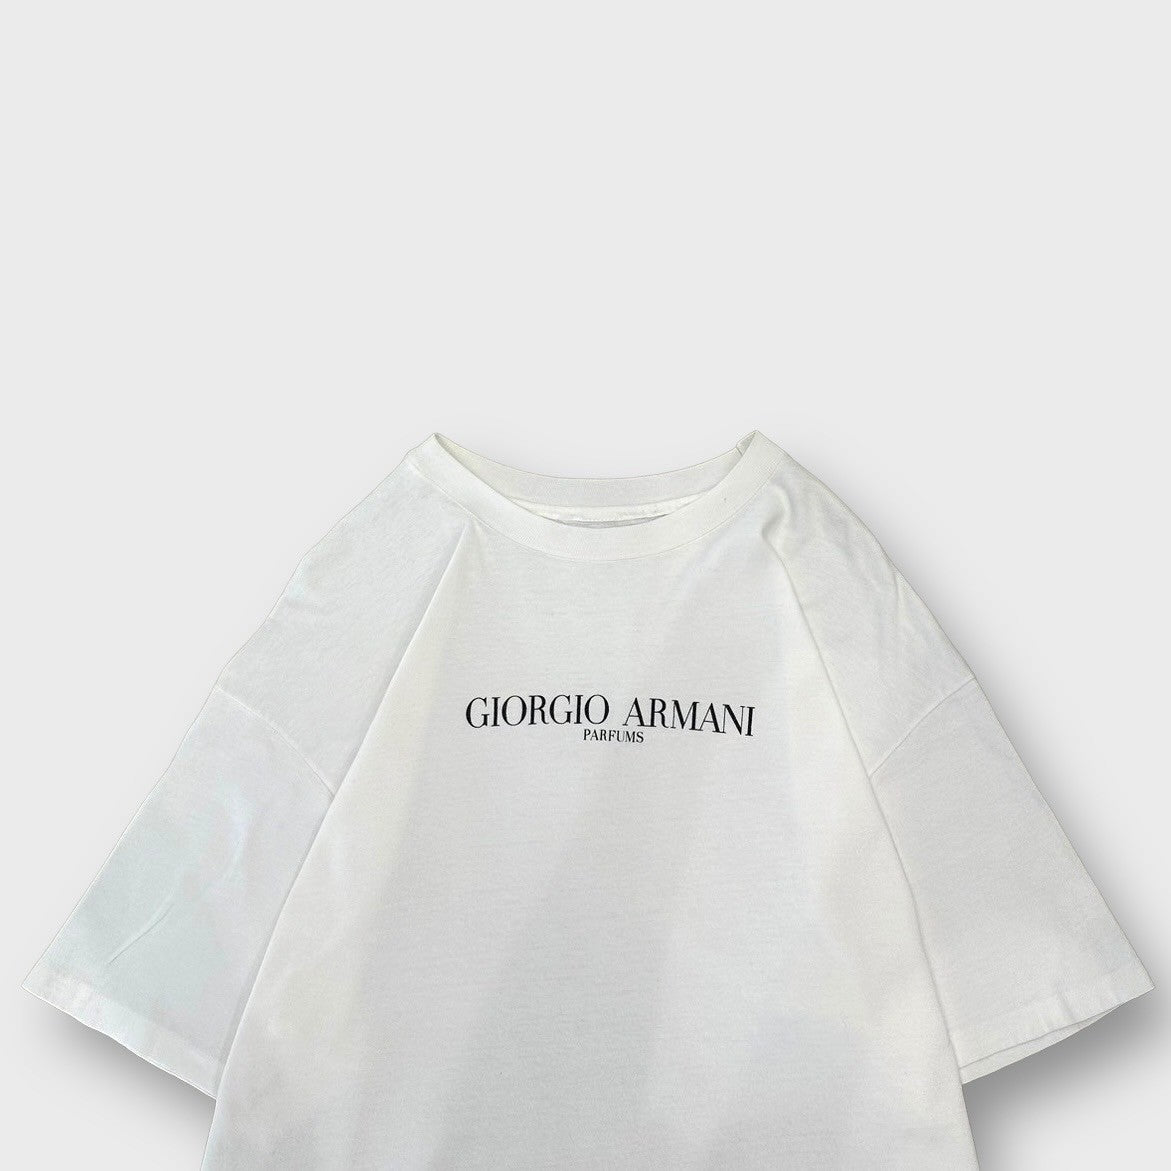 90's GIORGIO ARMANI
"Purfume" t-shirt